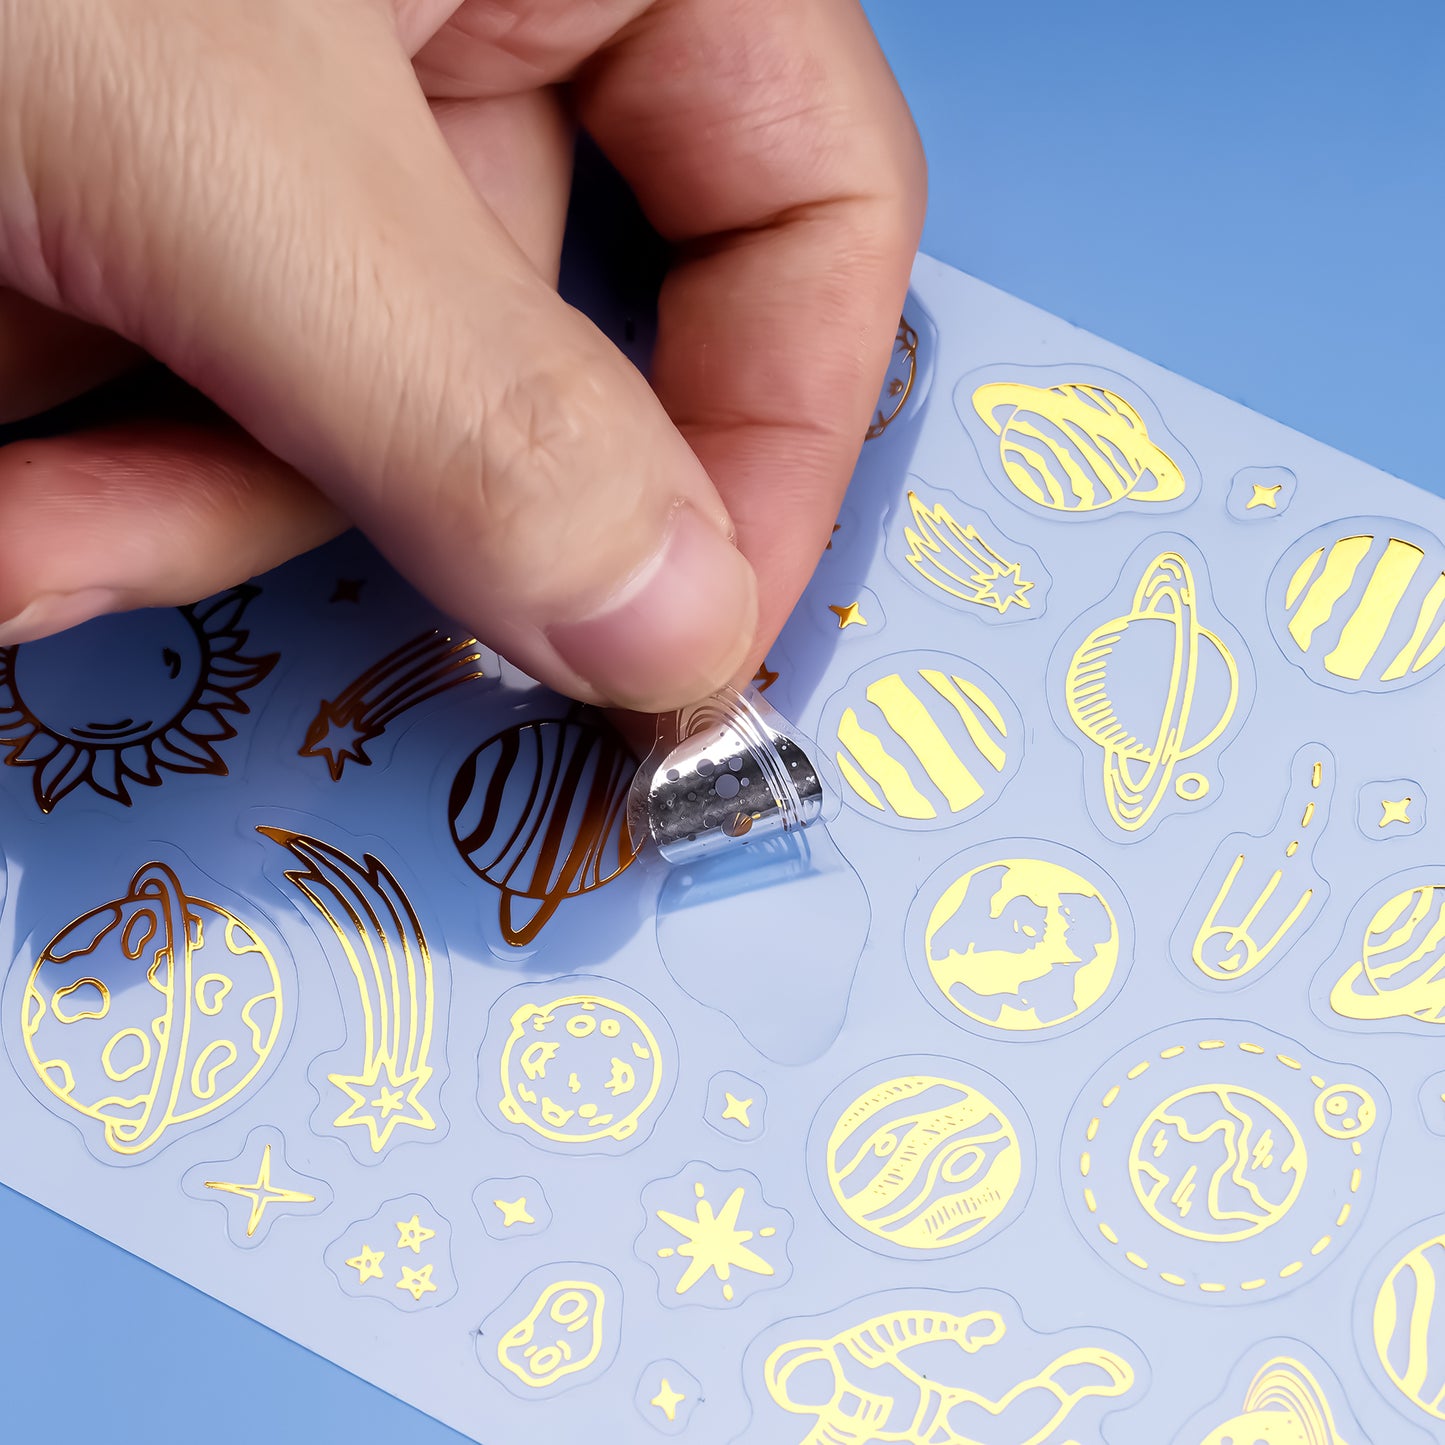 12 Sheets Golden Stickers DIY Resin Art Jewelry Casting Mold Supplies, Assorte